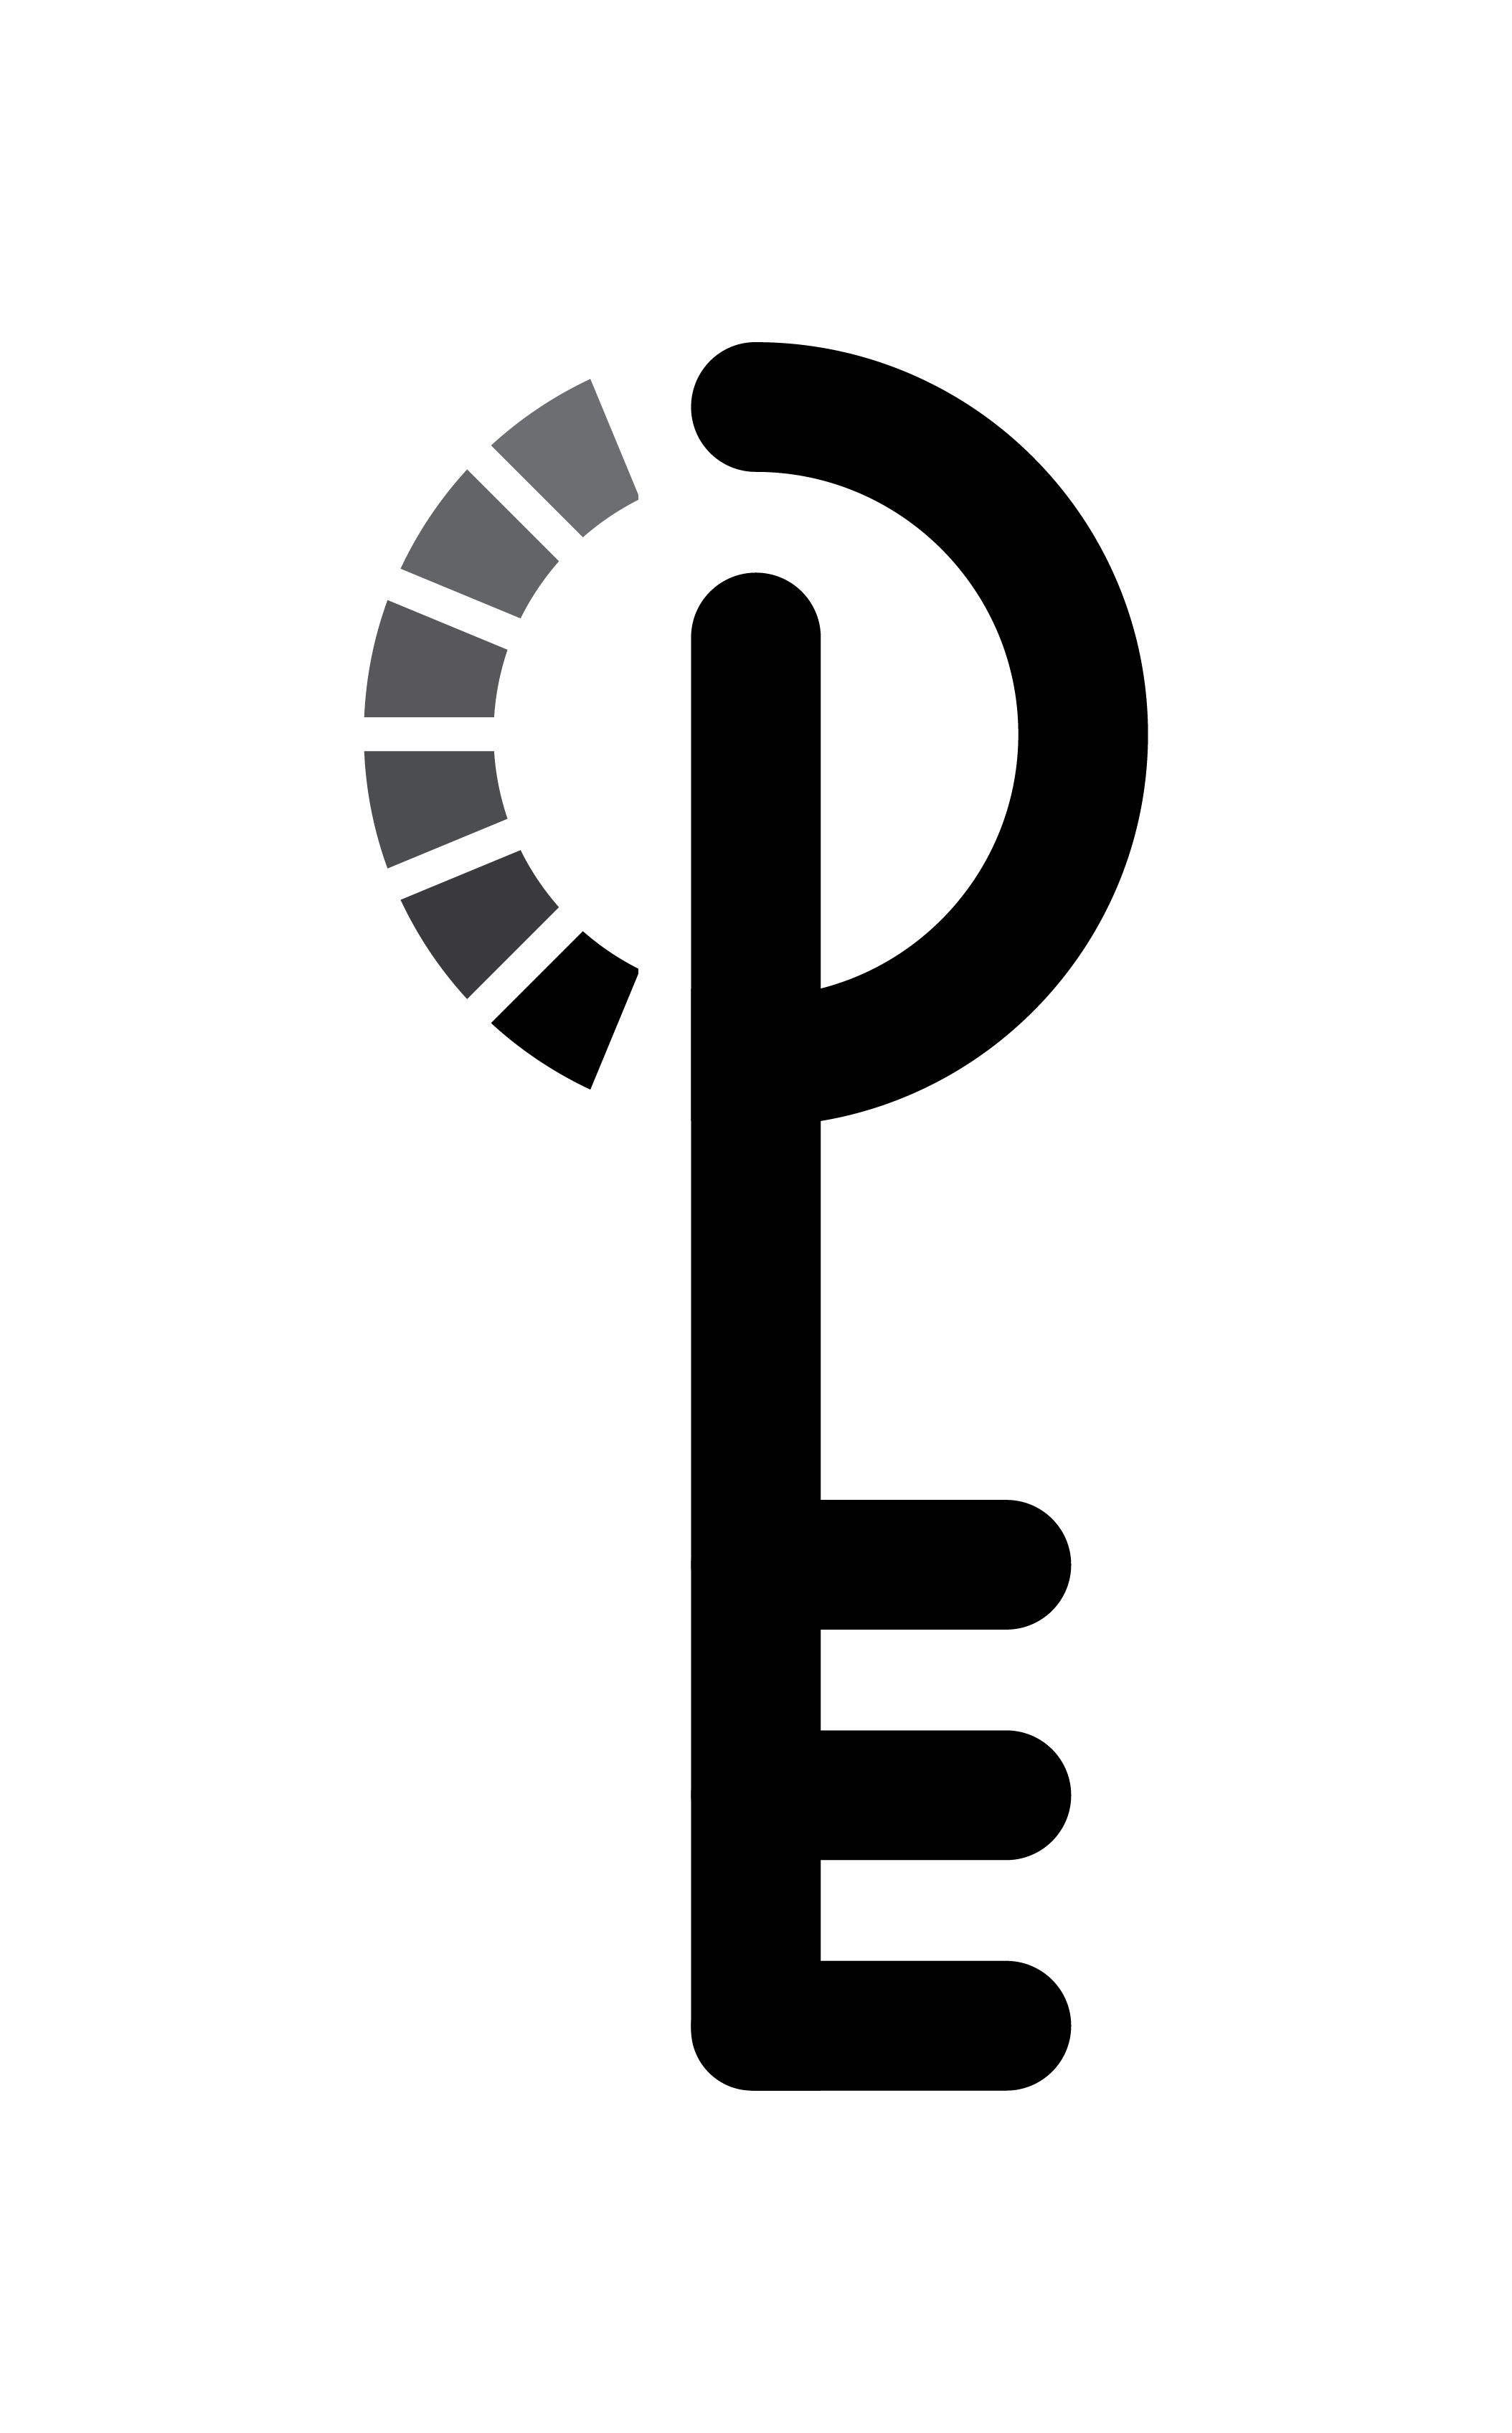 Energy Peace Partners logo